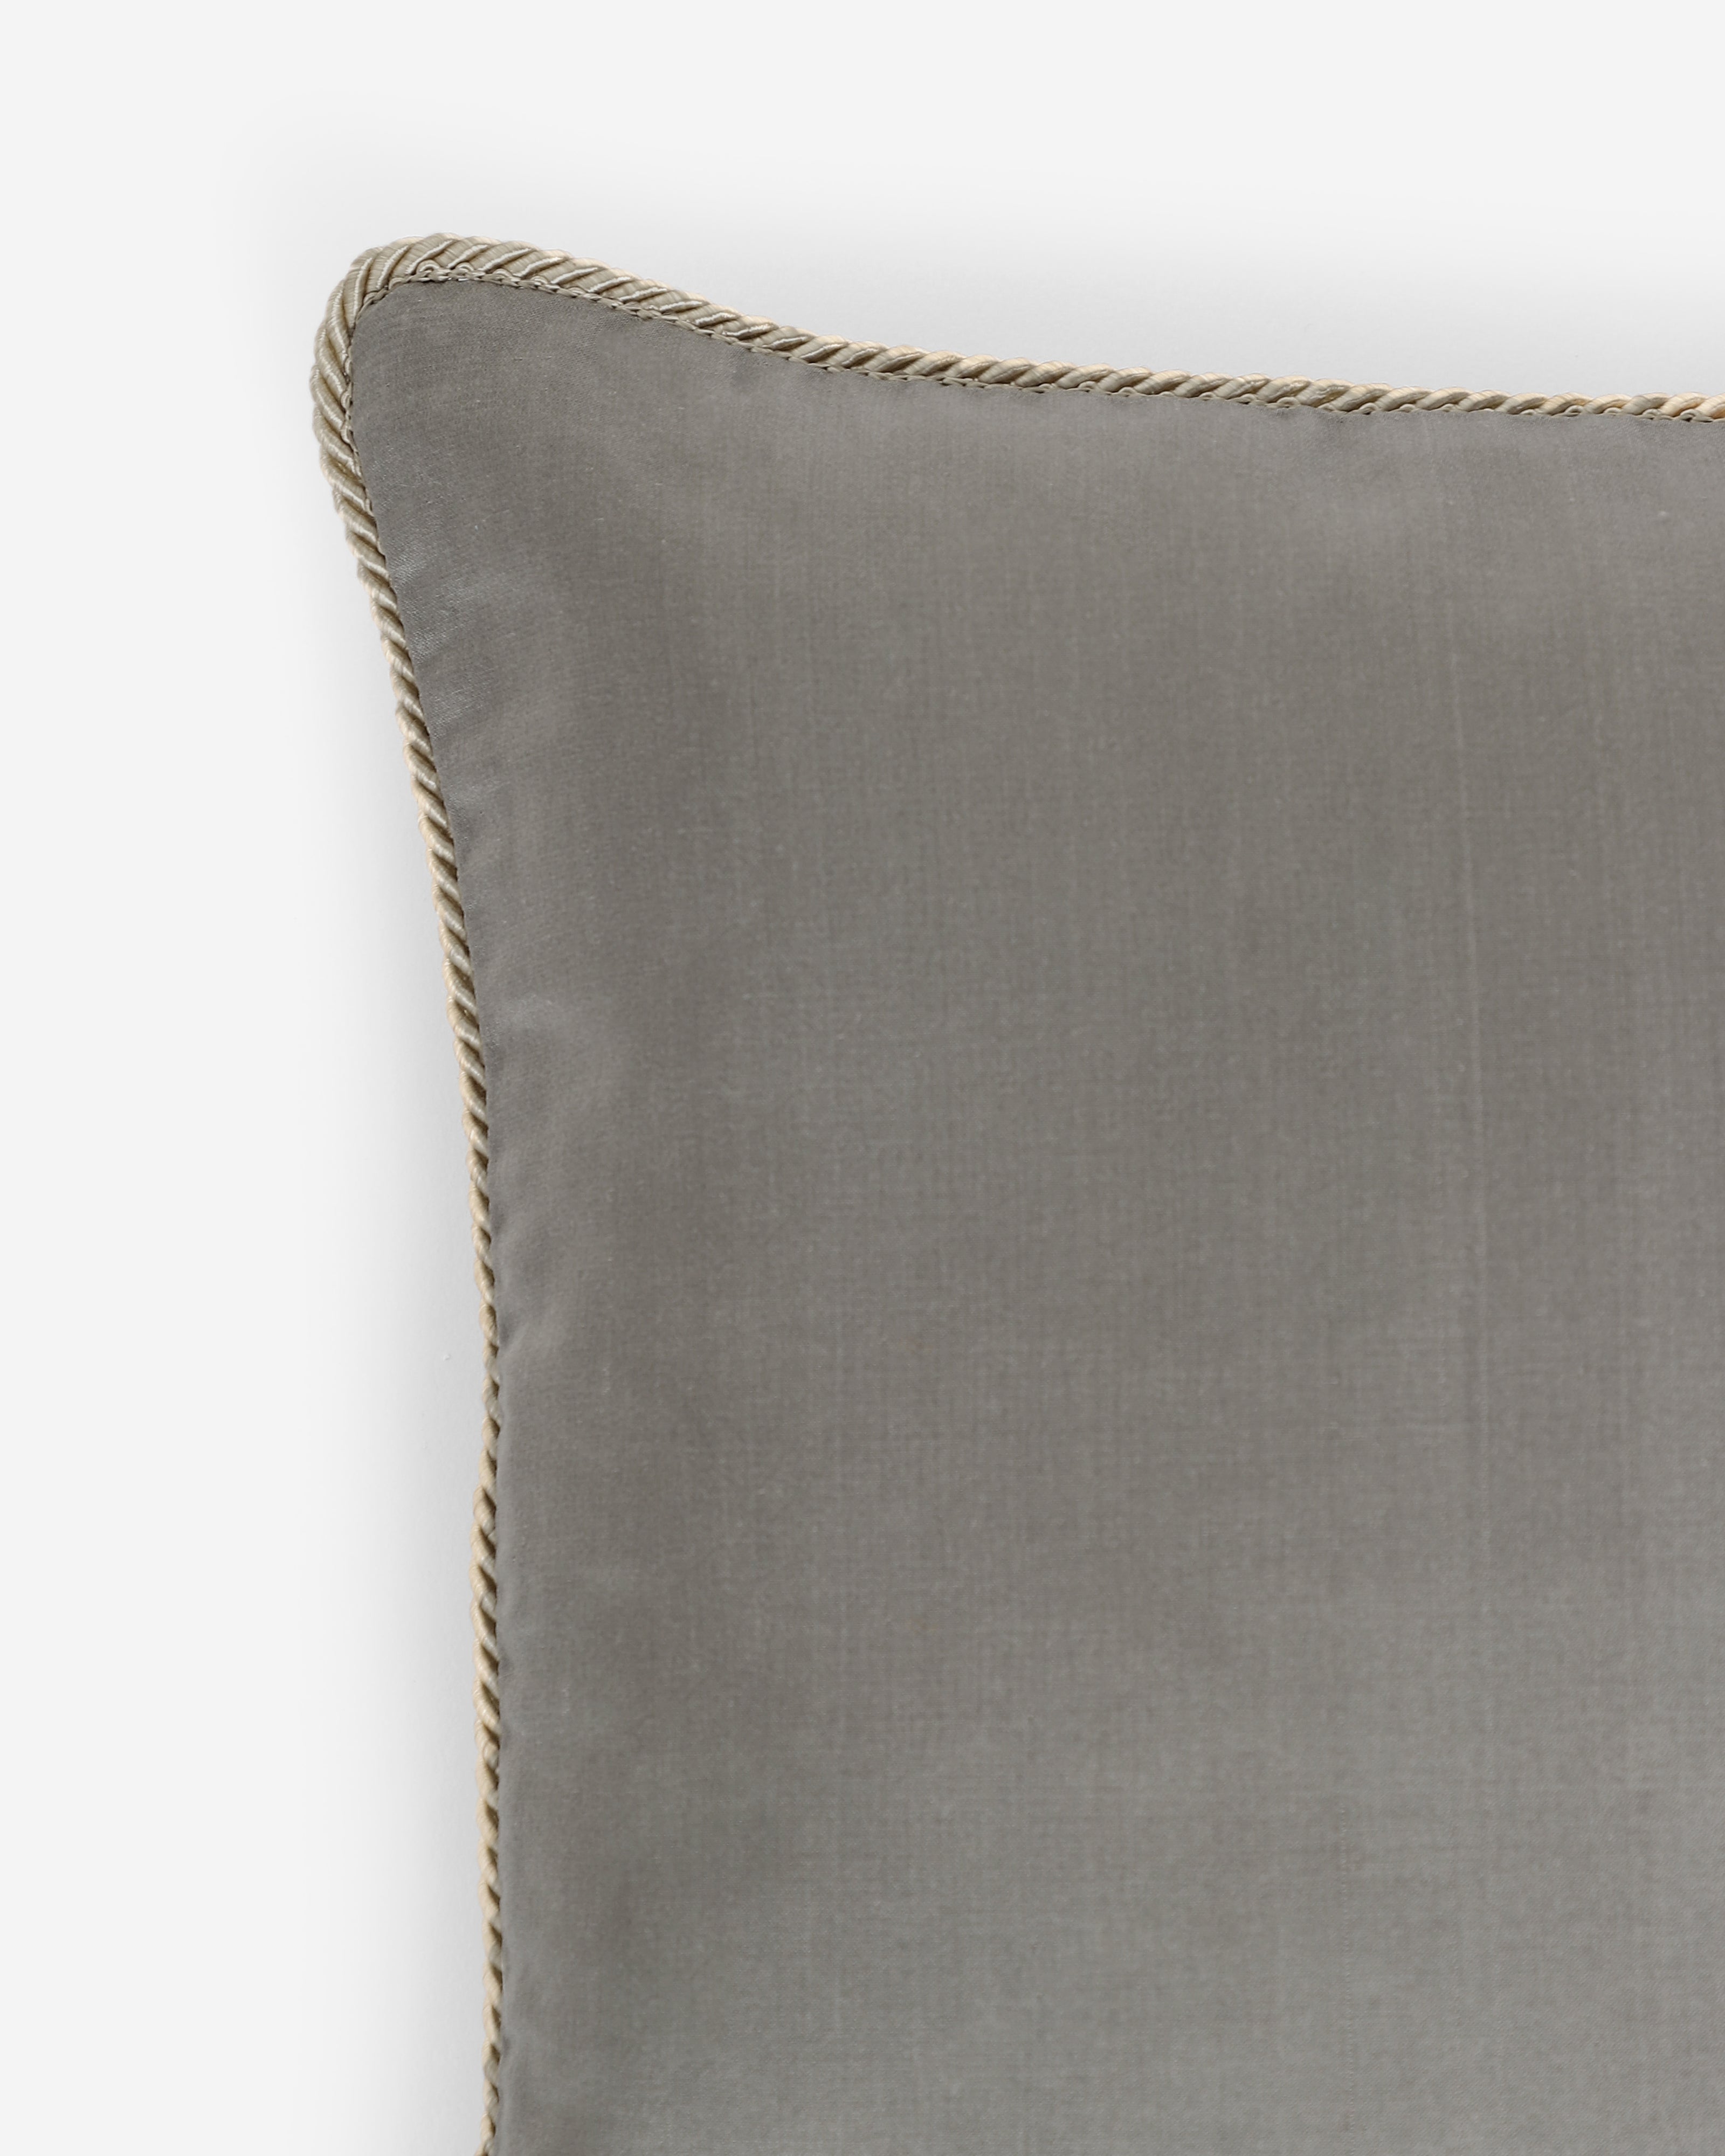 Solid Satin Silk Cotton Cushion Cover - Medium Grey